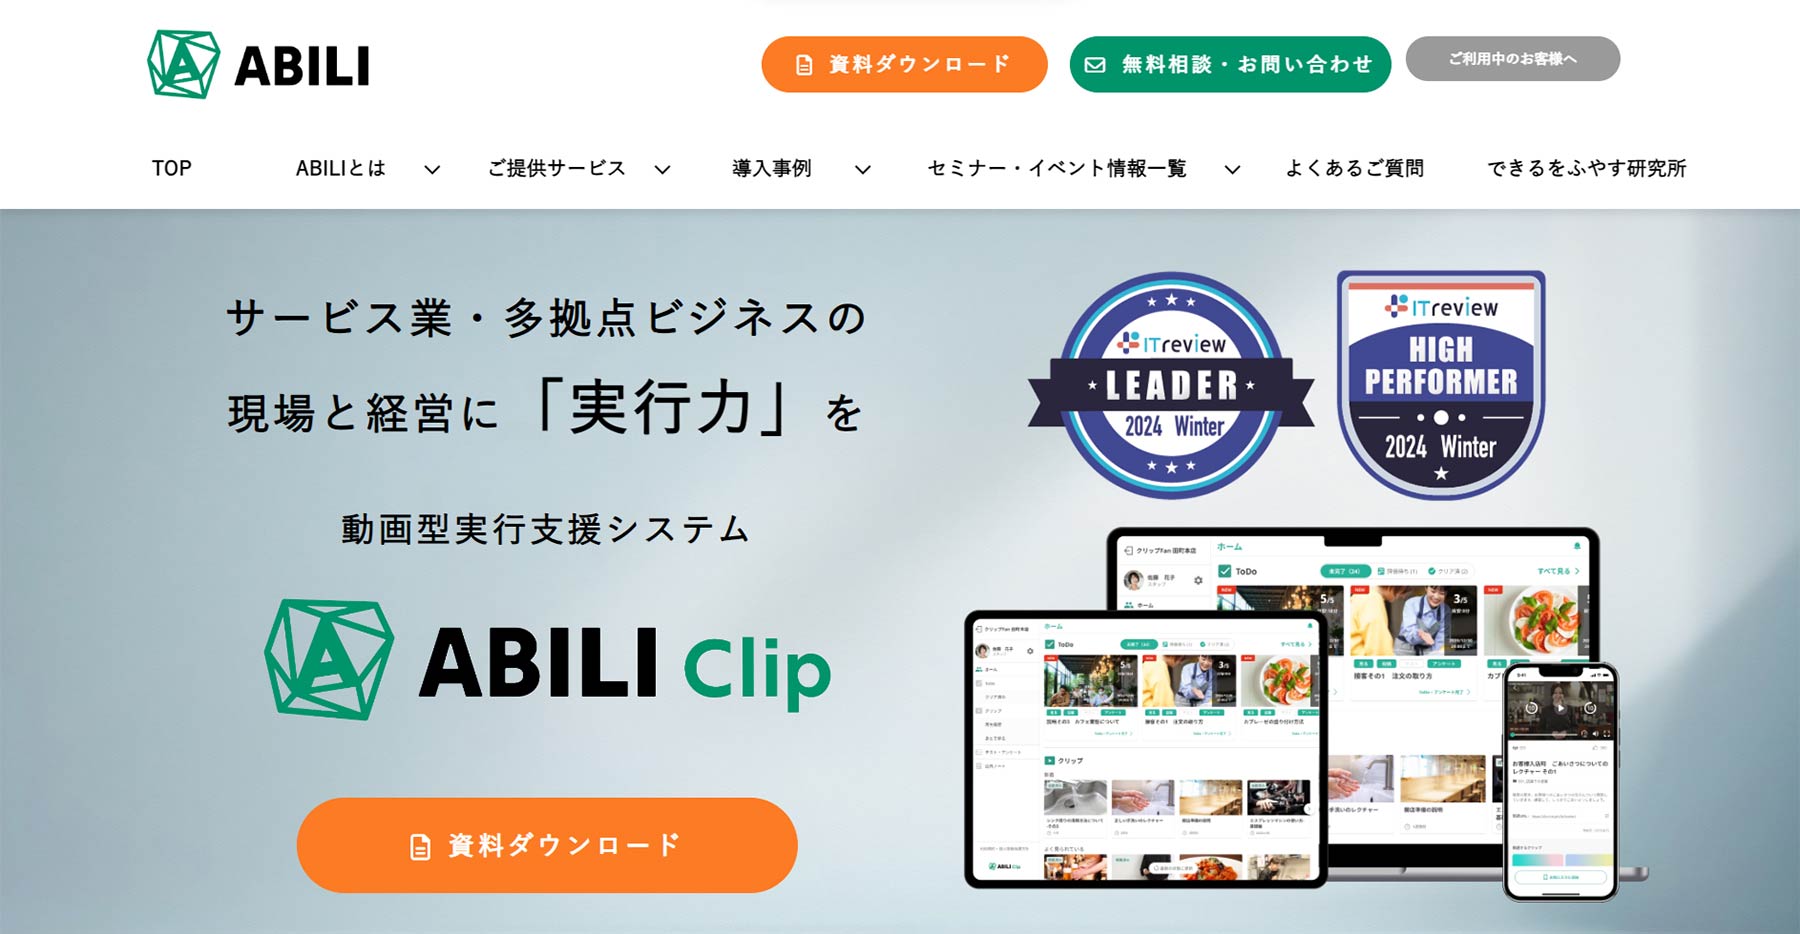 ABILI Clip公式Webサイト